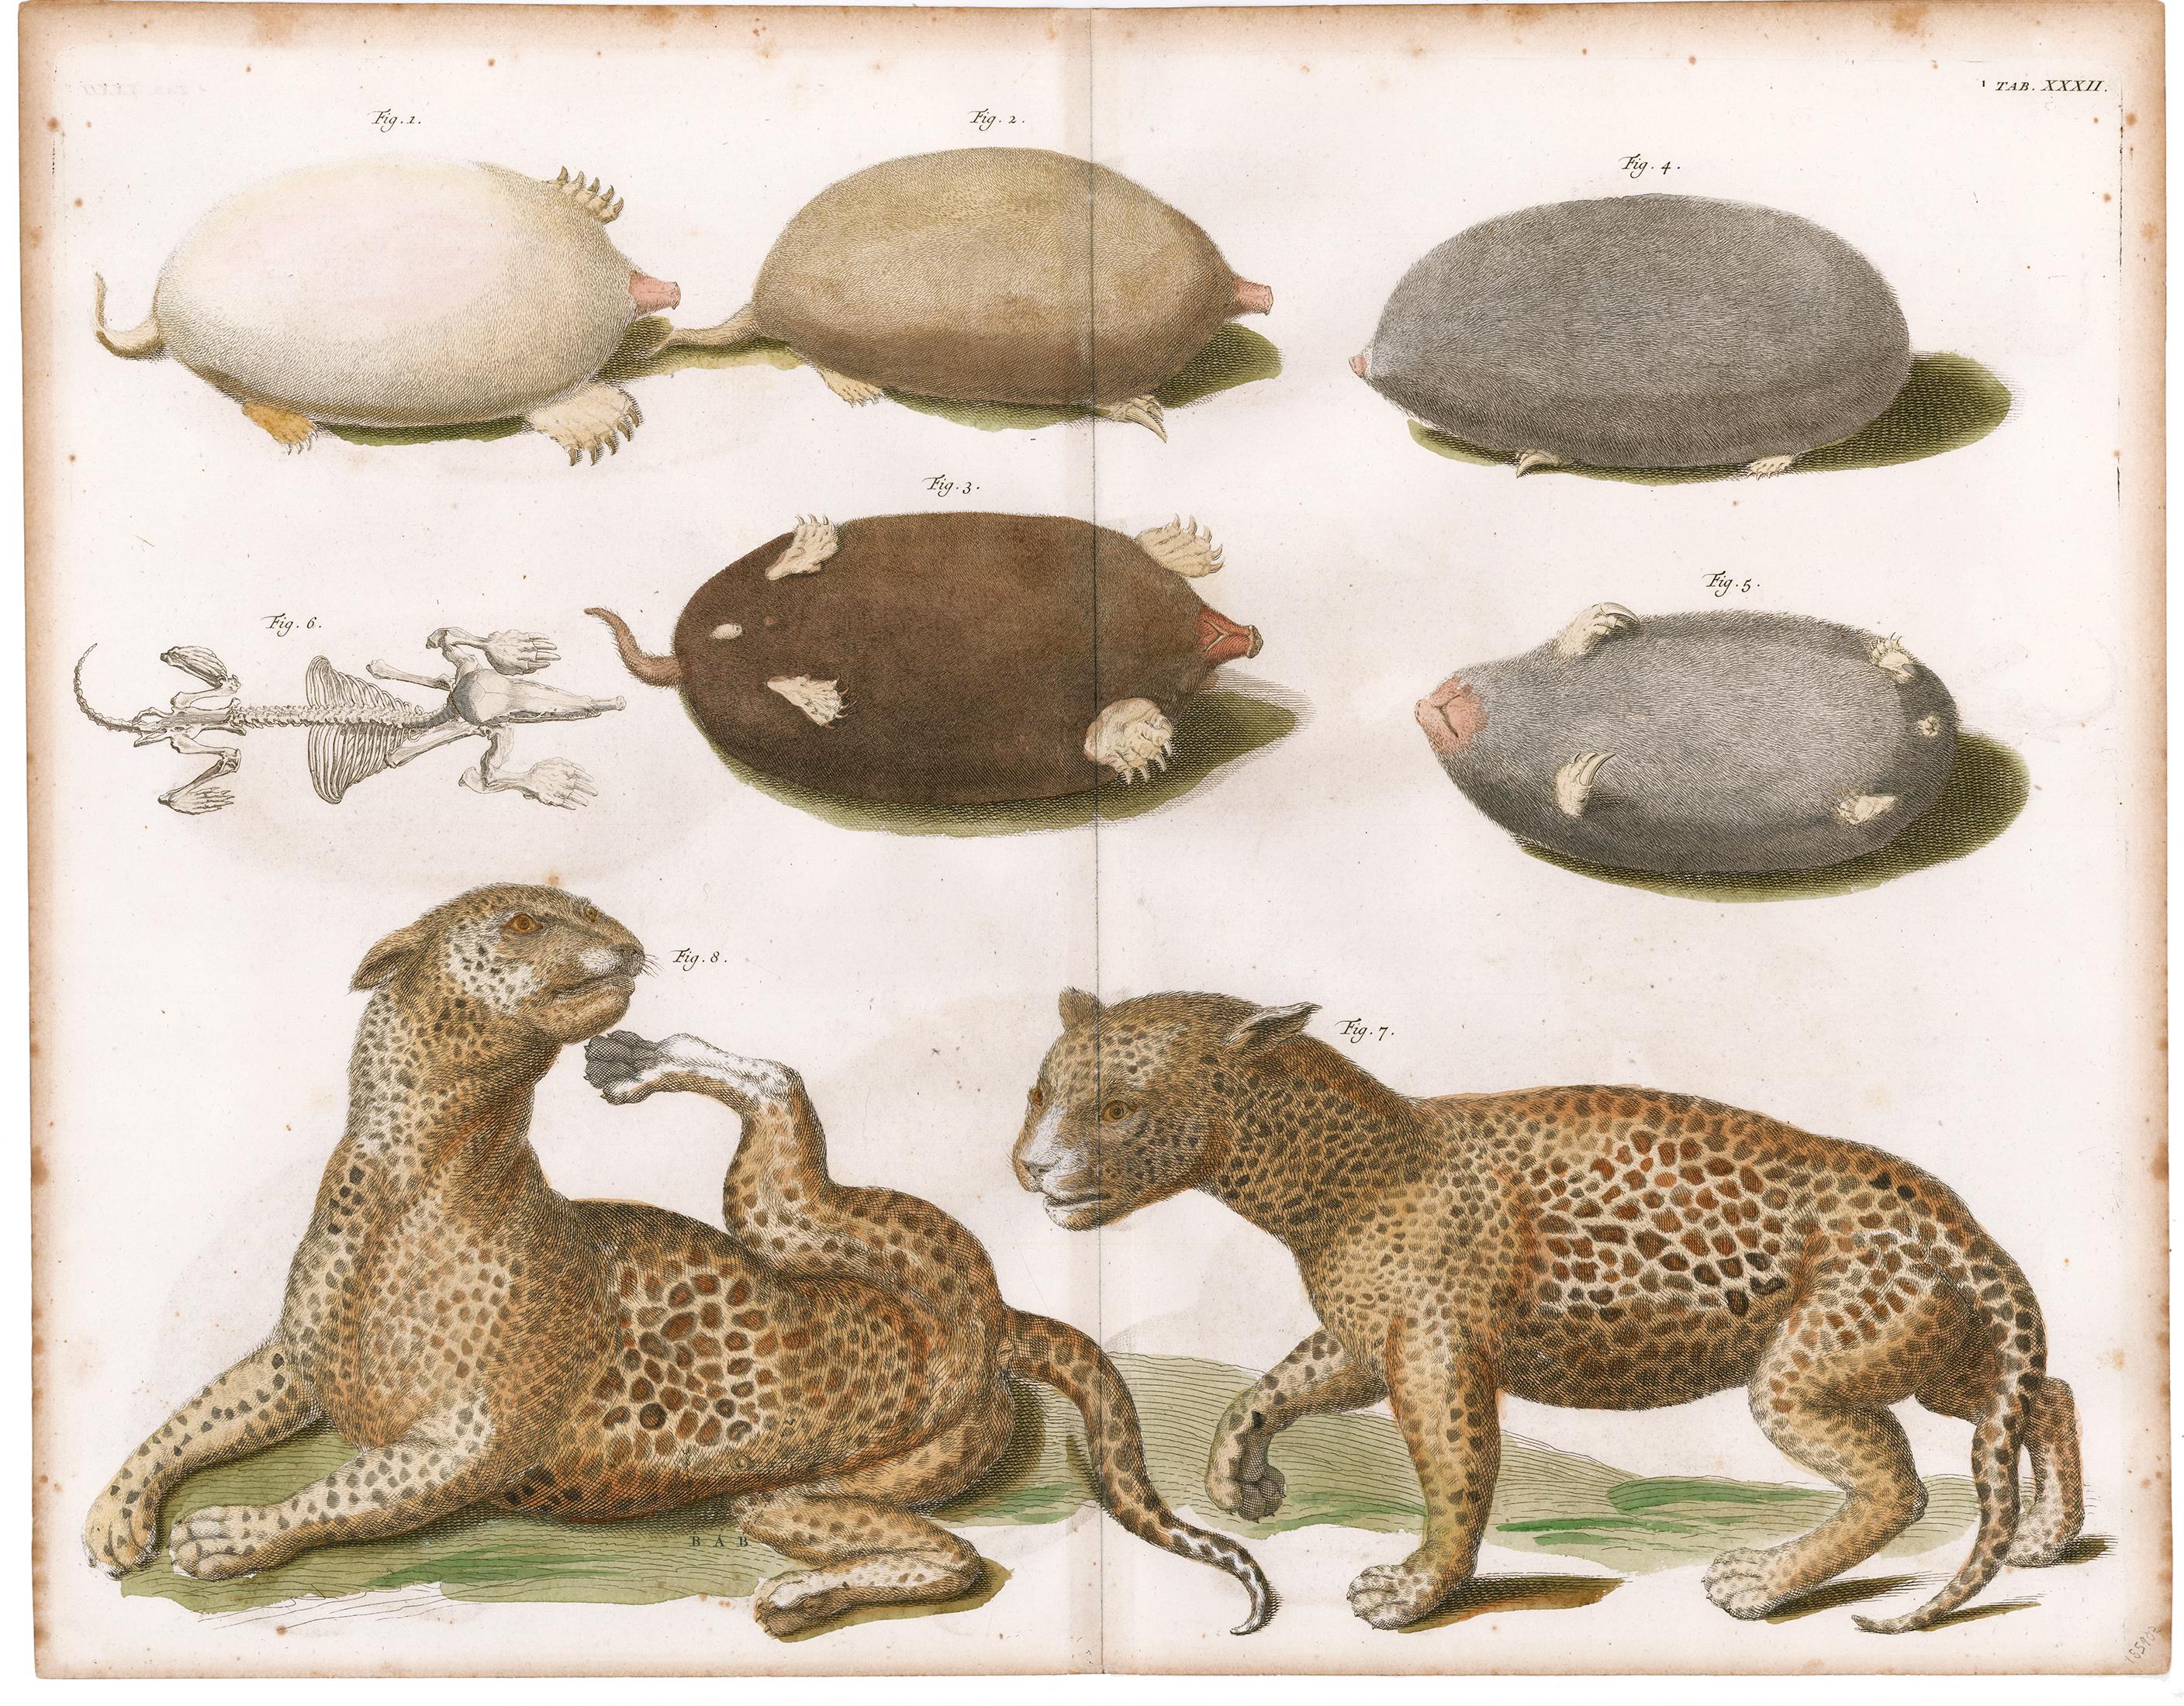 Leopards and Mole Engraving - Print by [SEBA, Albertus].